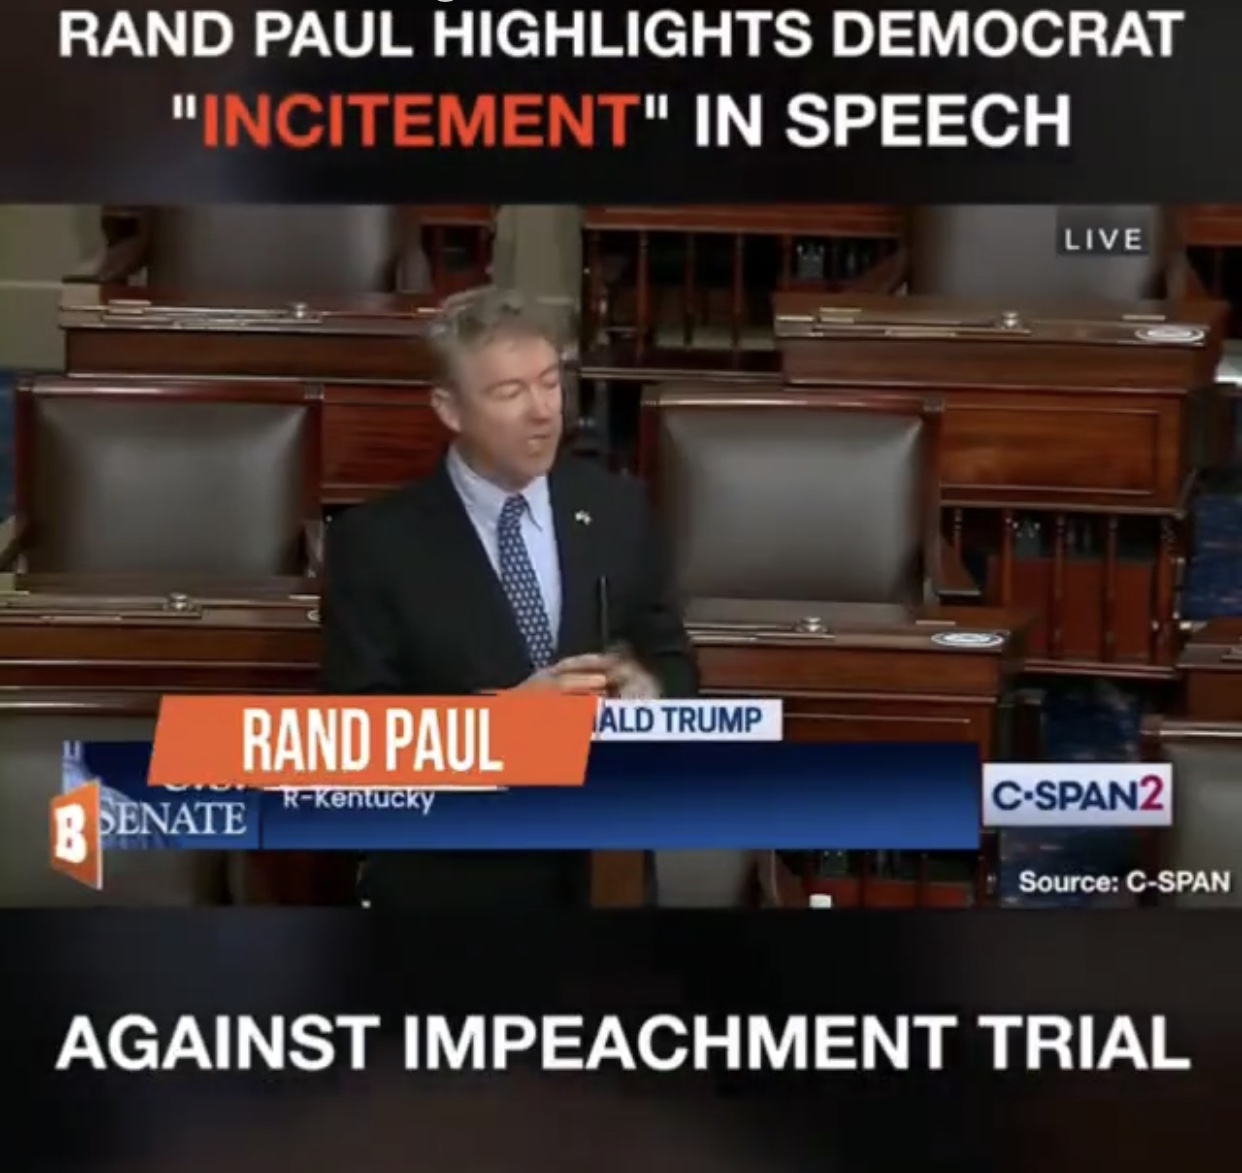 Senator Rand Paul Addressing Congress Against an Impeachment Trial